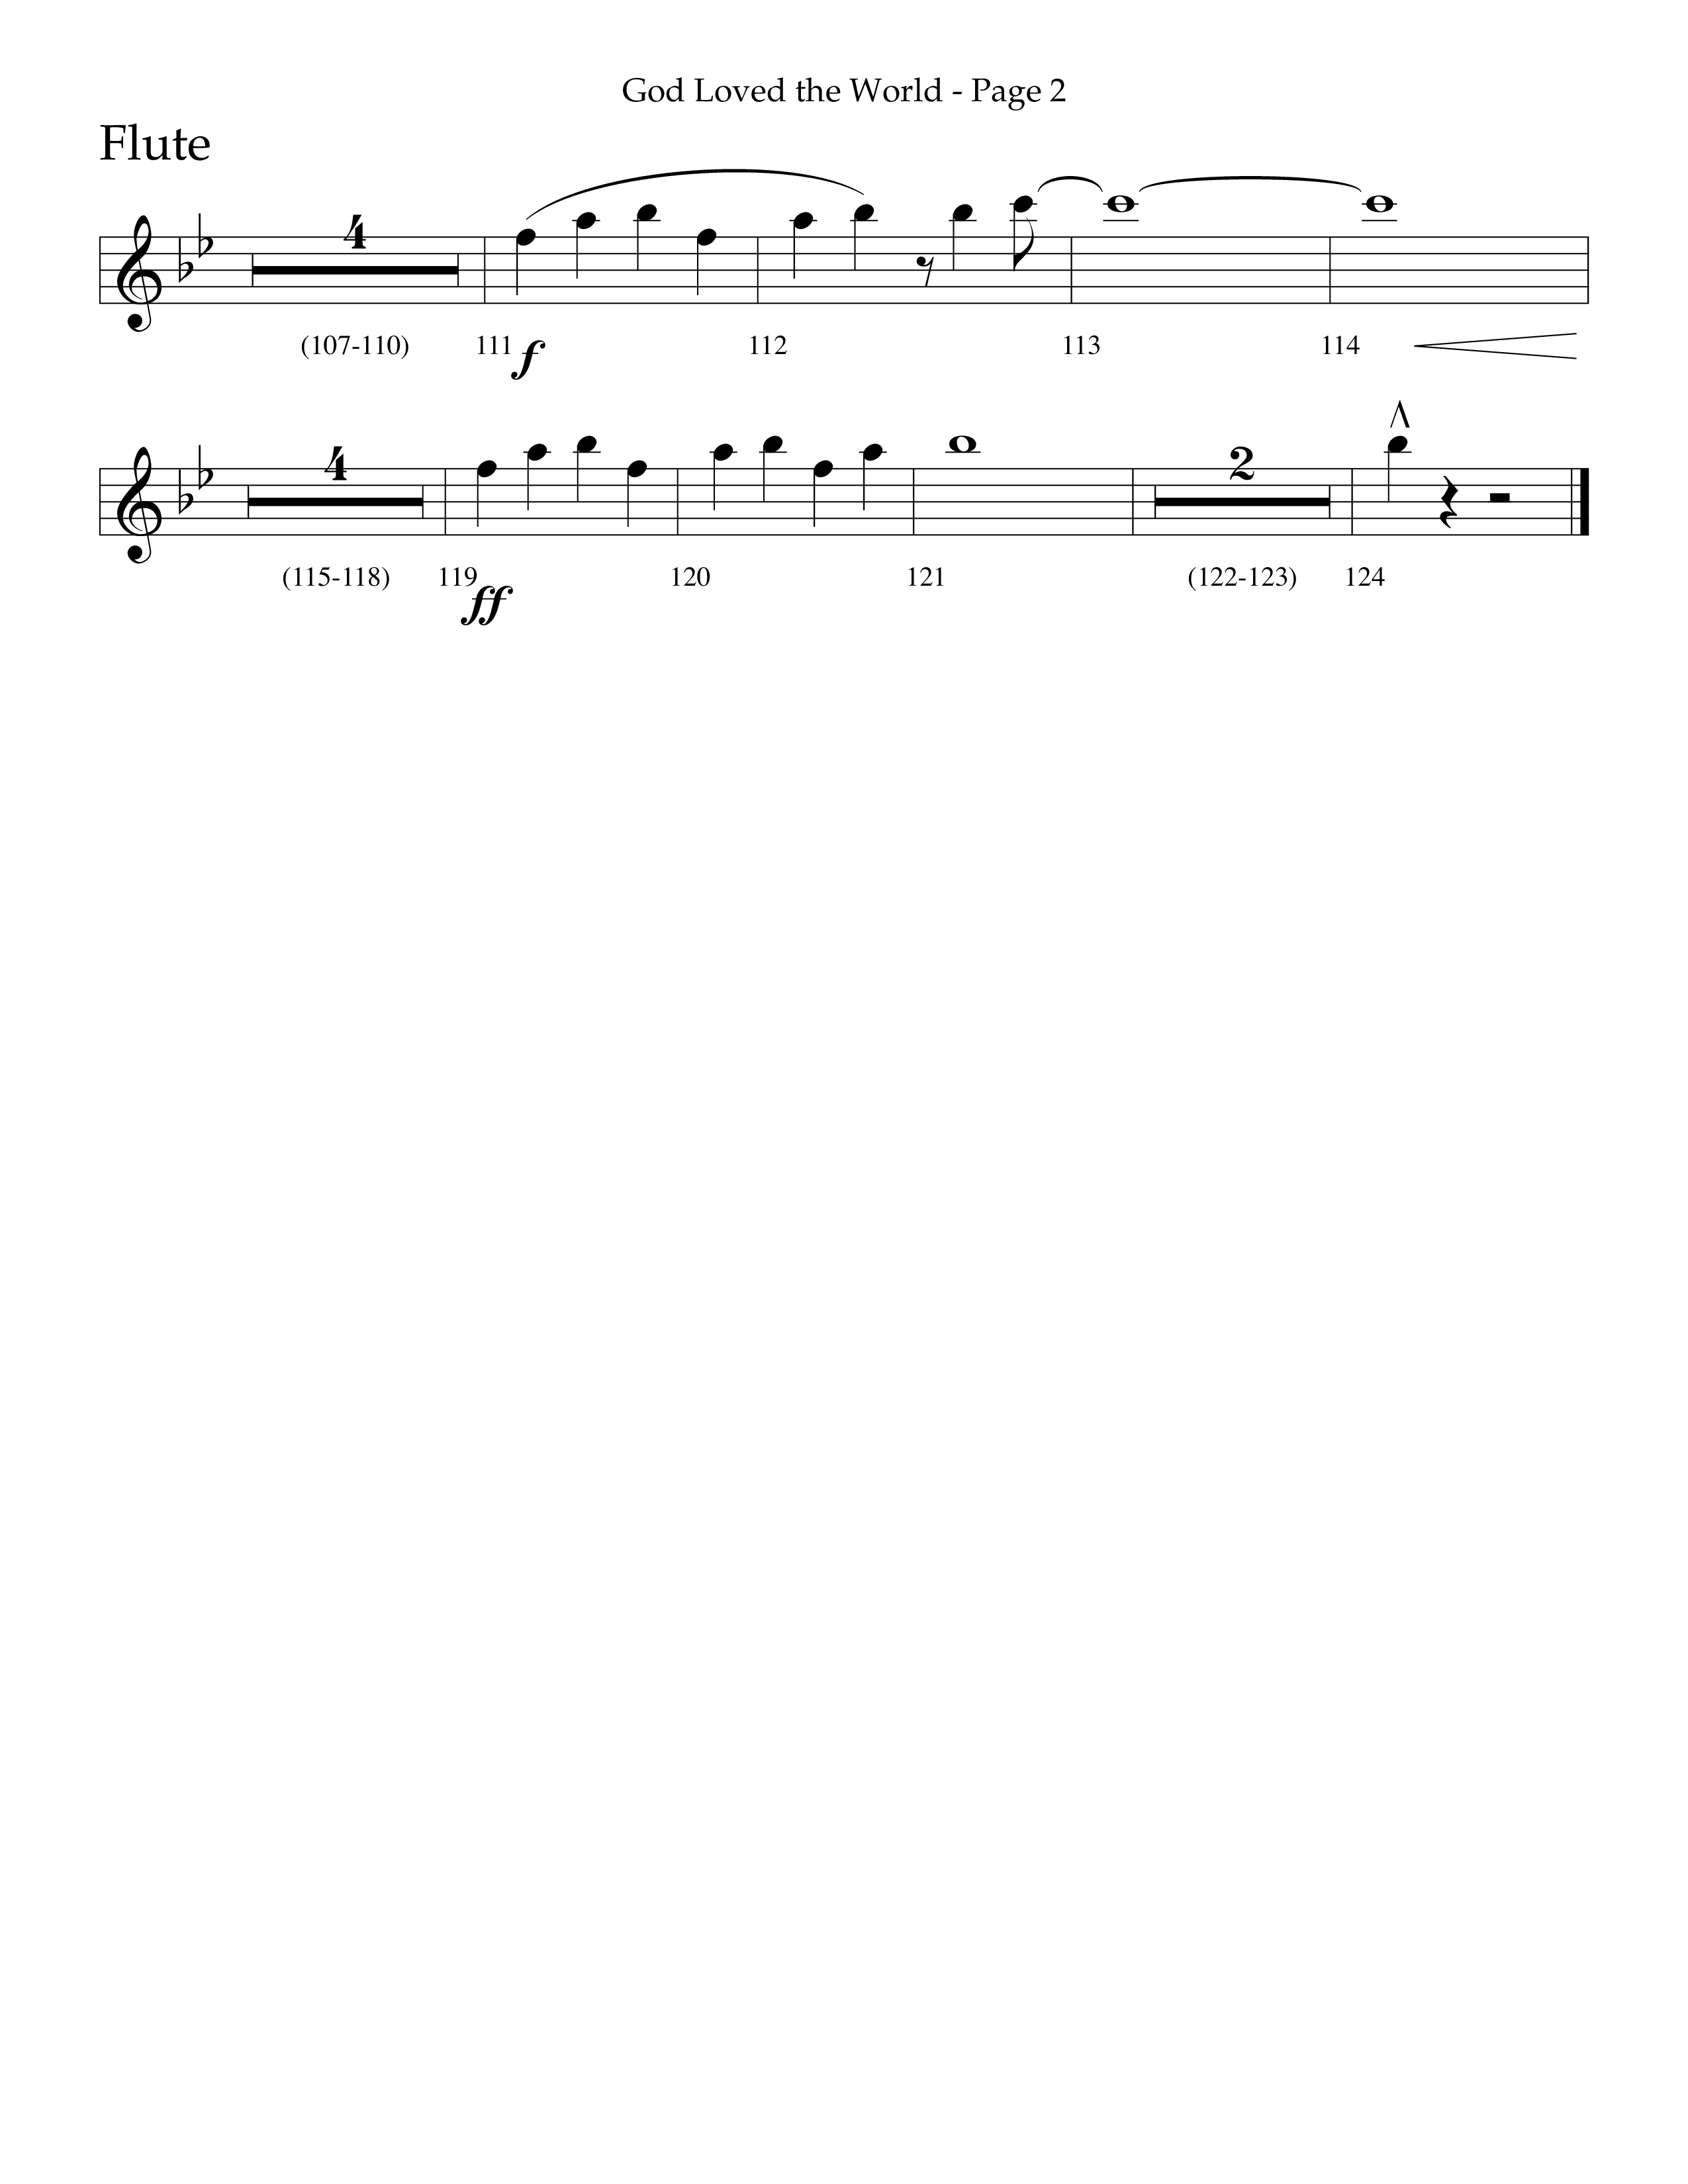 God Loved The World (Choral Anthem SATB) Flute (Lifeway Choral / Arr. Cliff Duren)